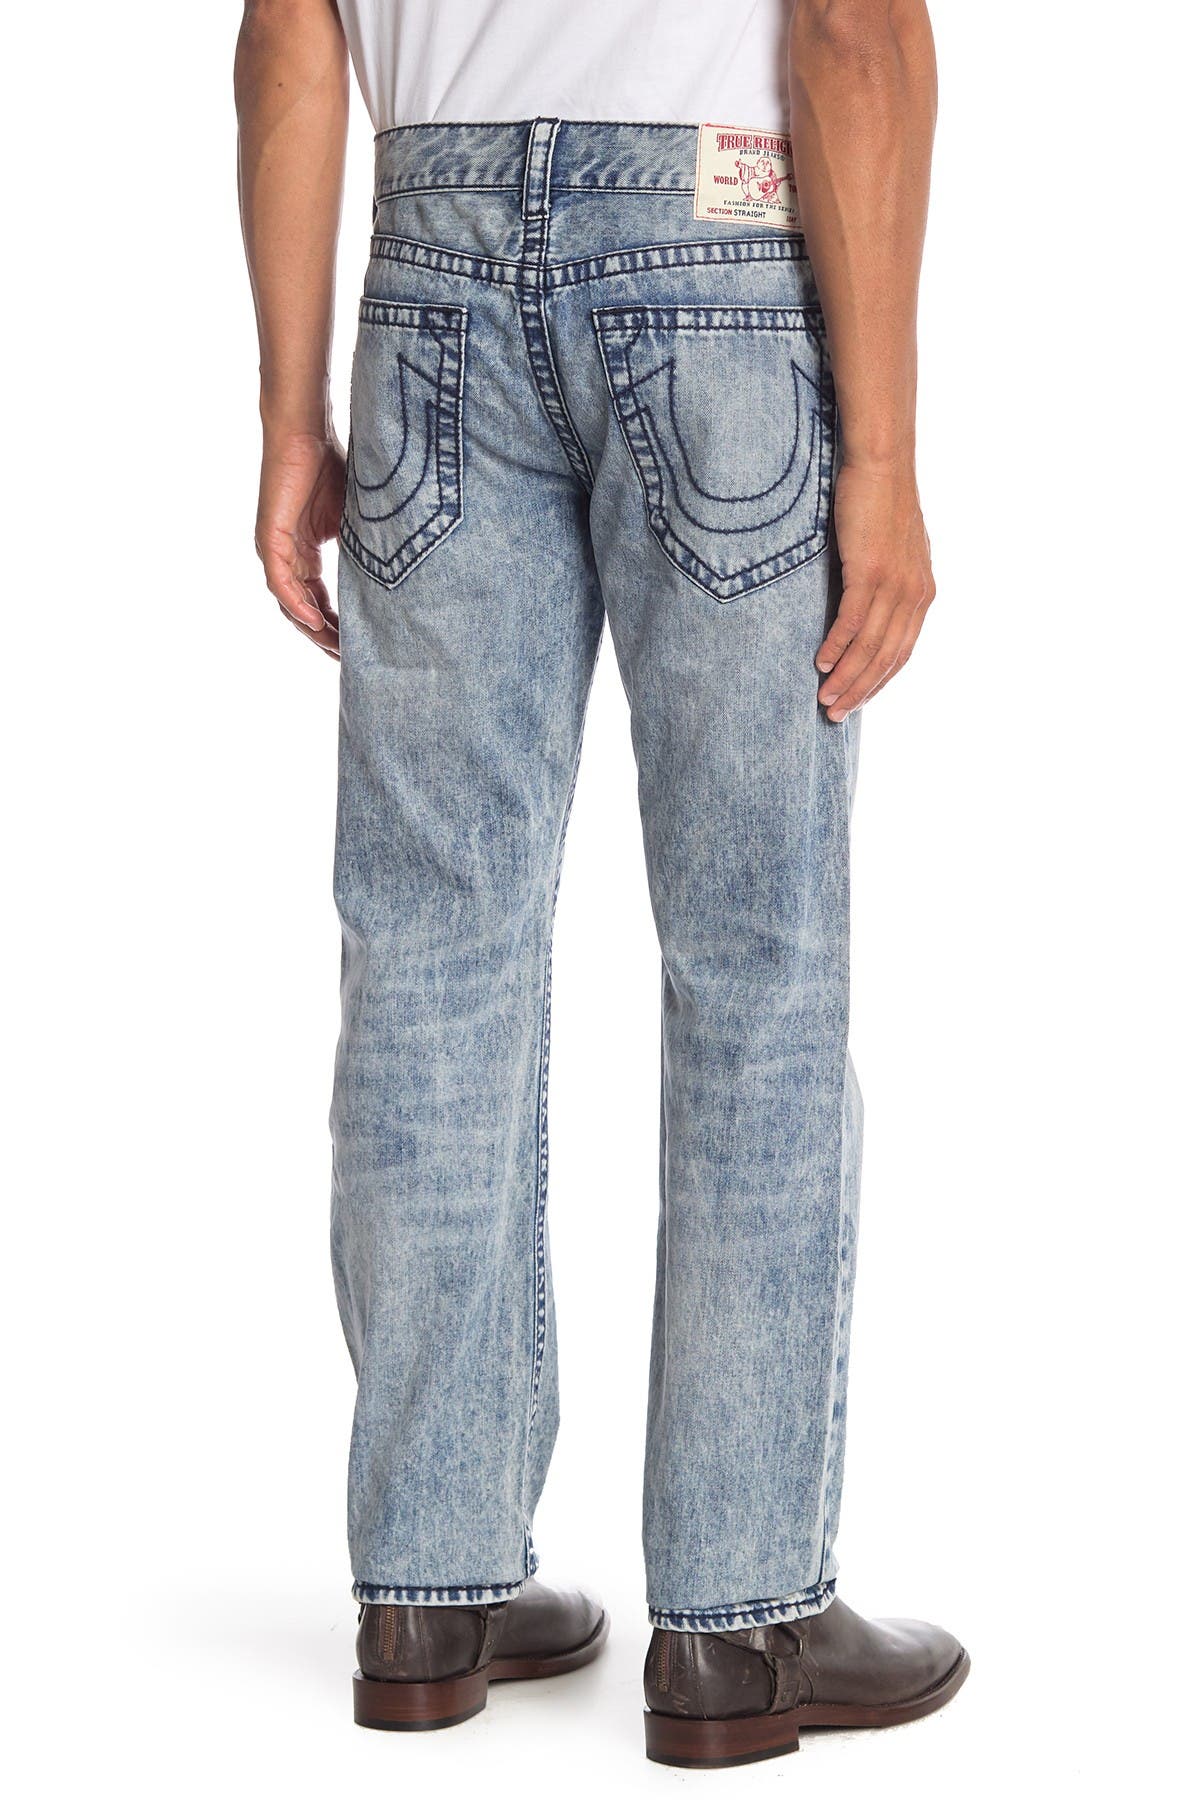 true religion jeans styles